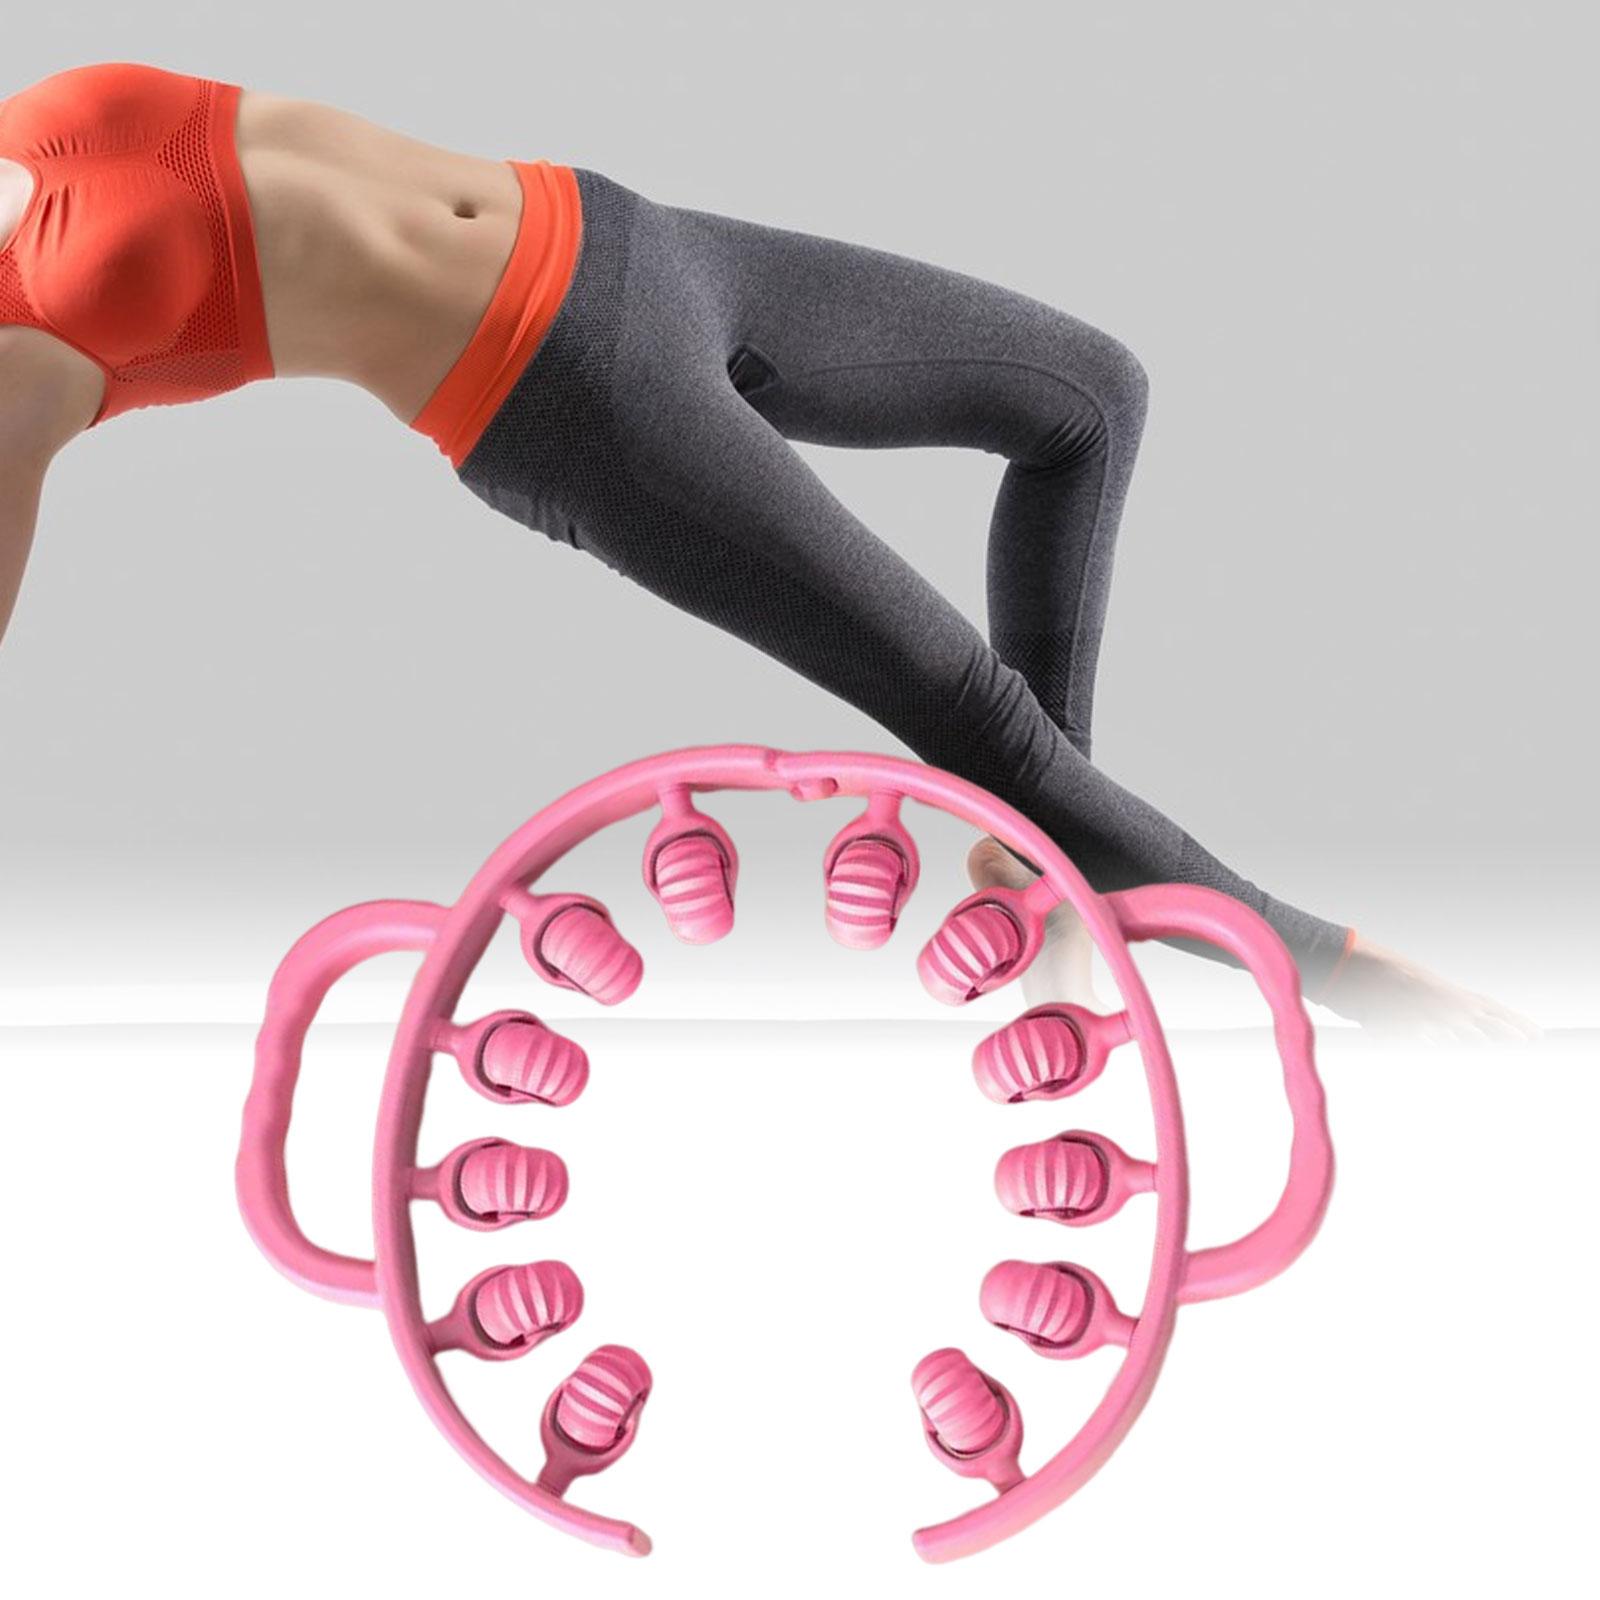 Leg Massage Roller Portable Muscle Roller Massage Tool for Calves Thigh Legs Ordinary Pink